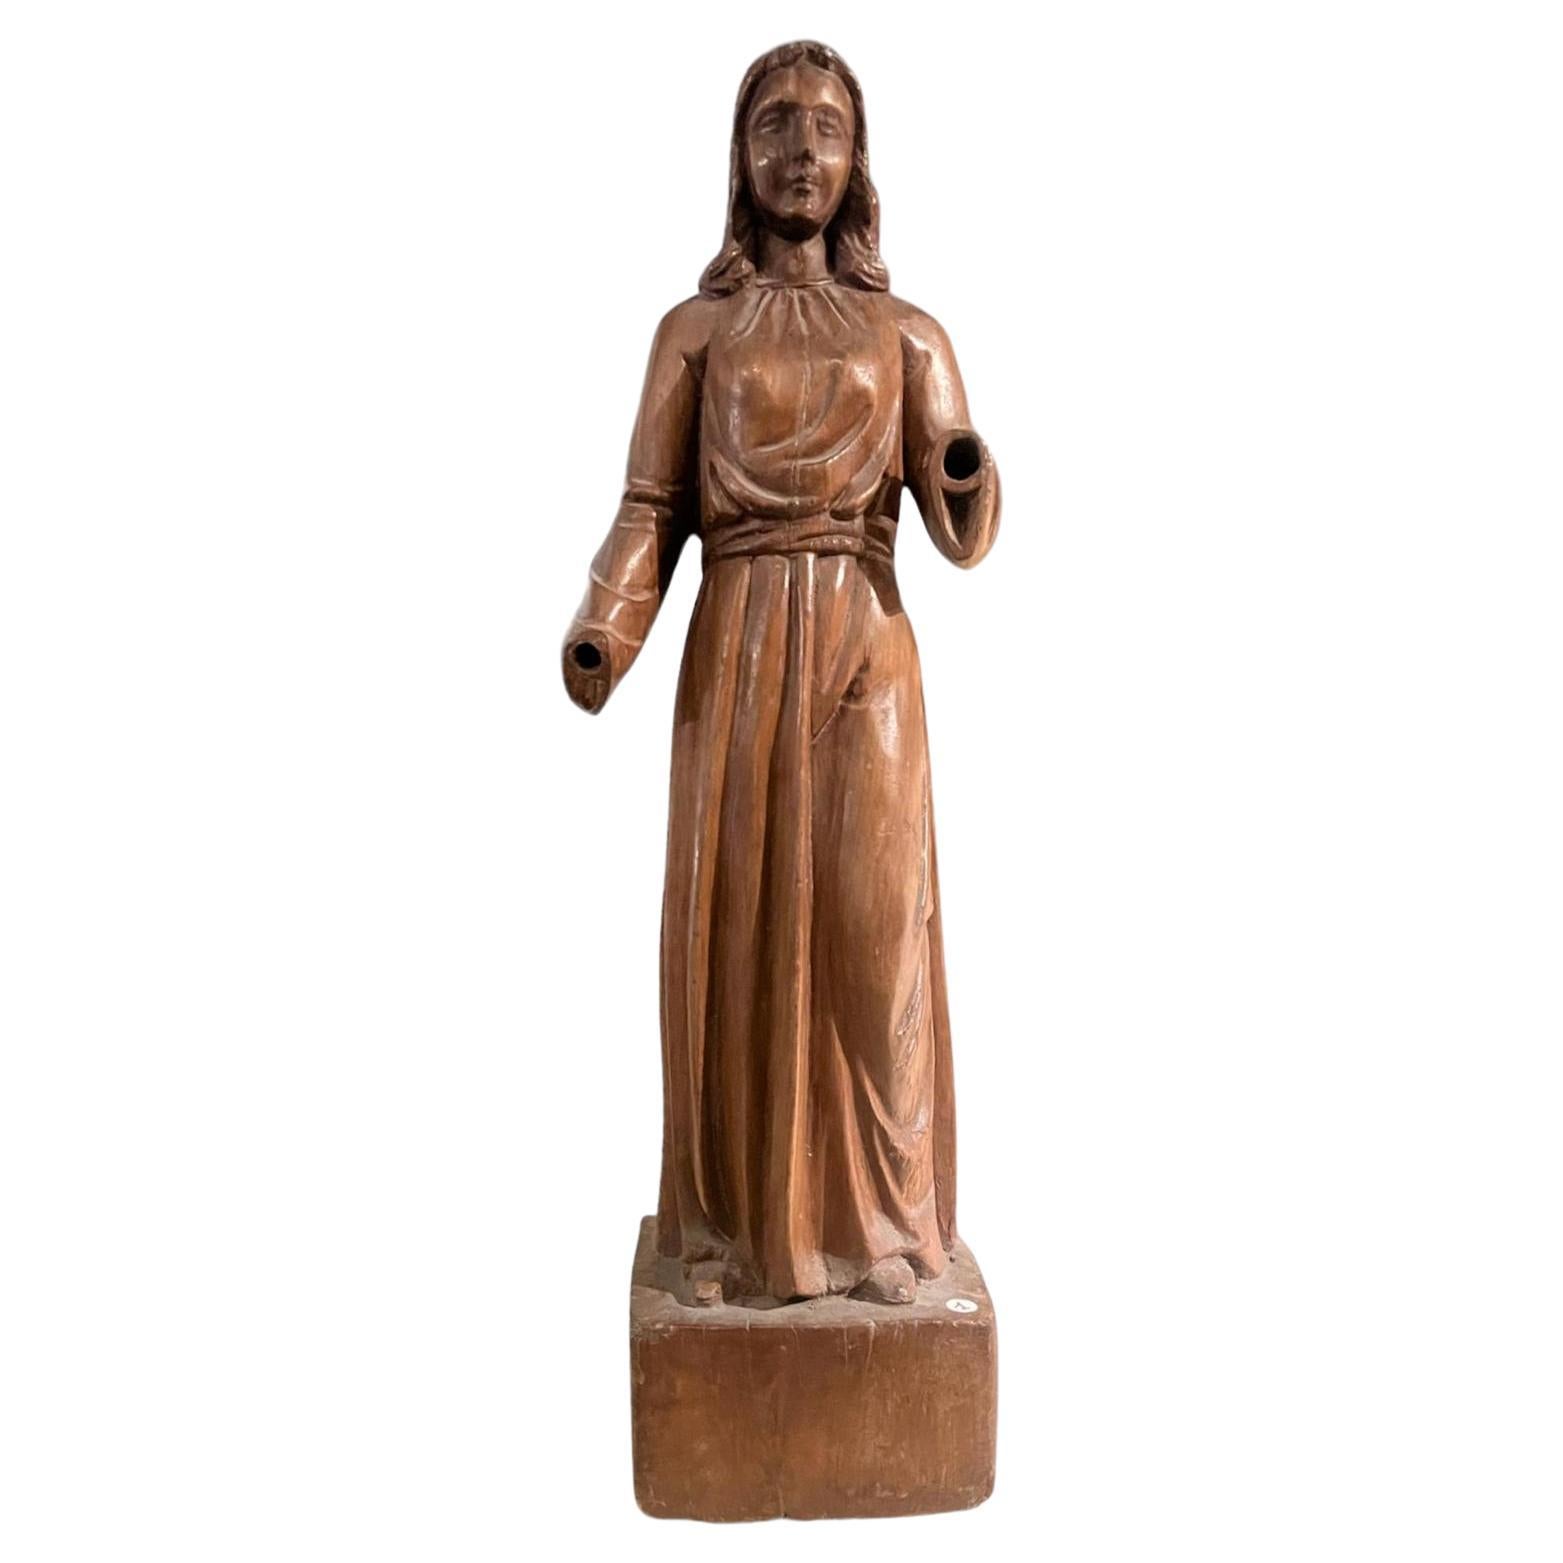 17th Century Wooden sculpture depicting a female figure